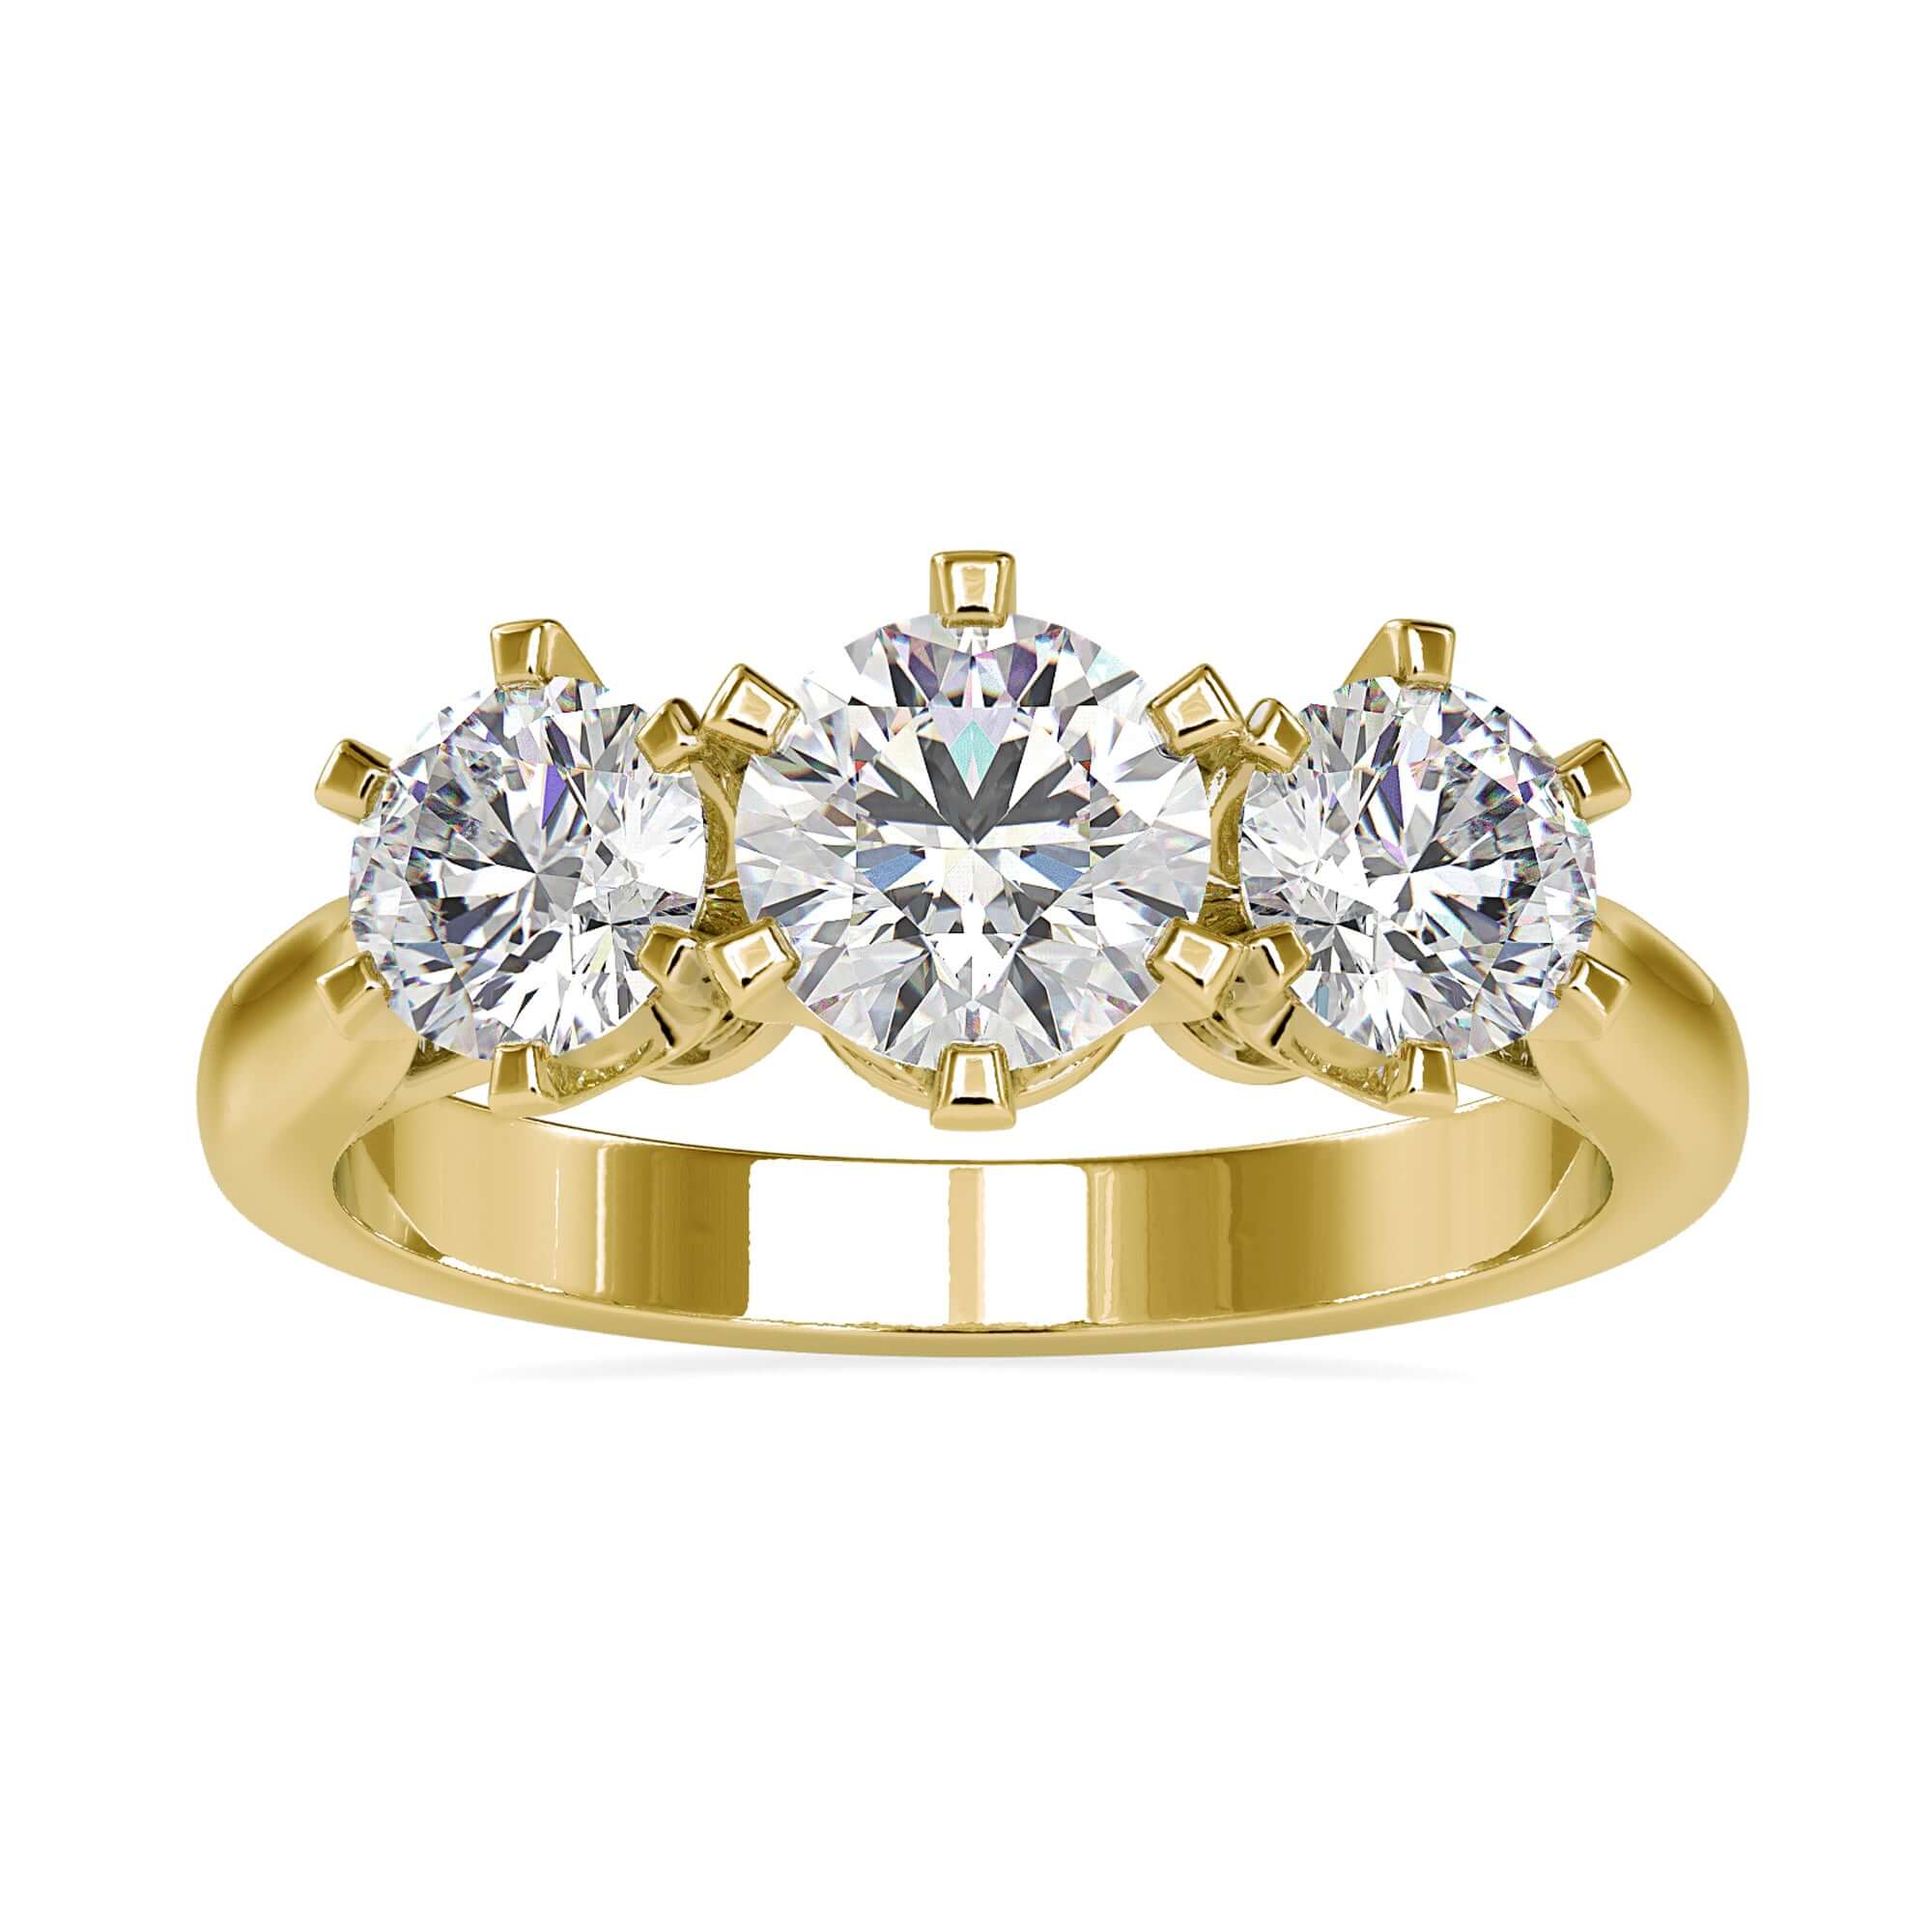 customized engagement ring - diamondrensu